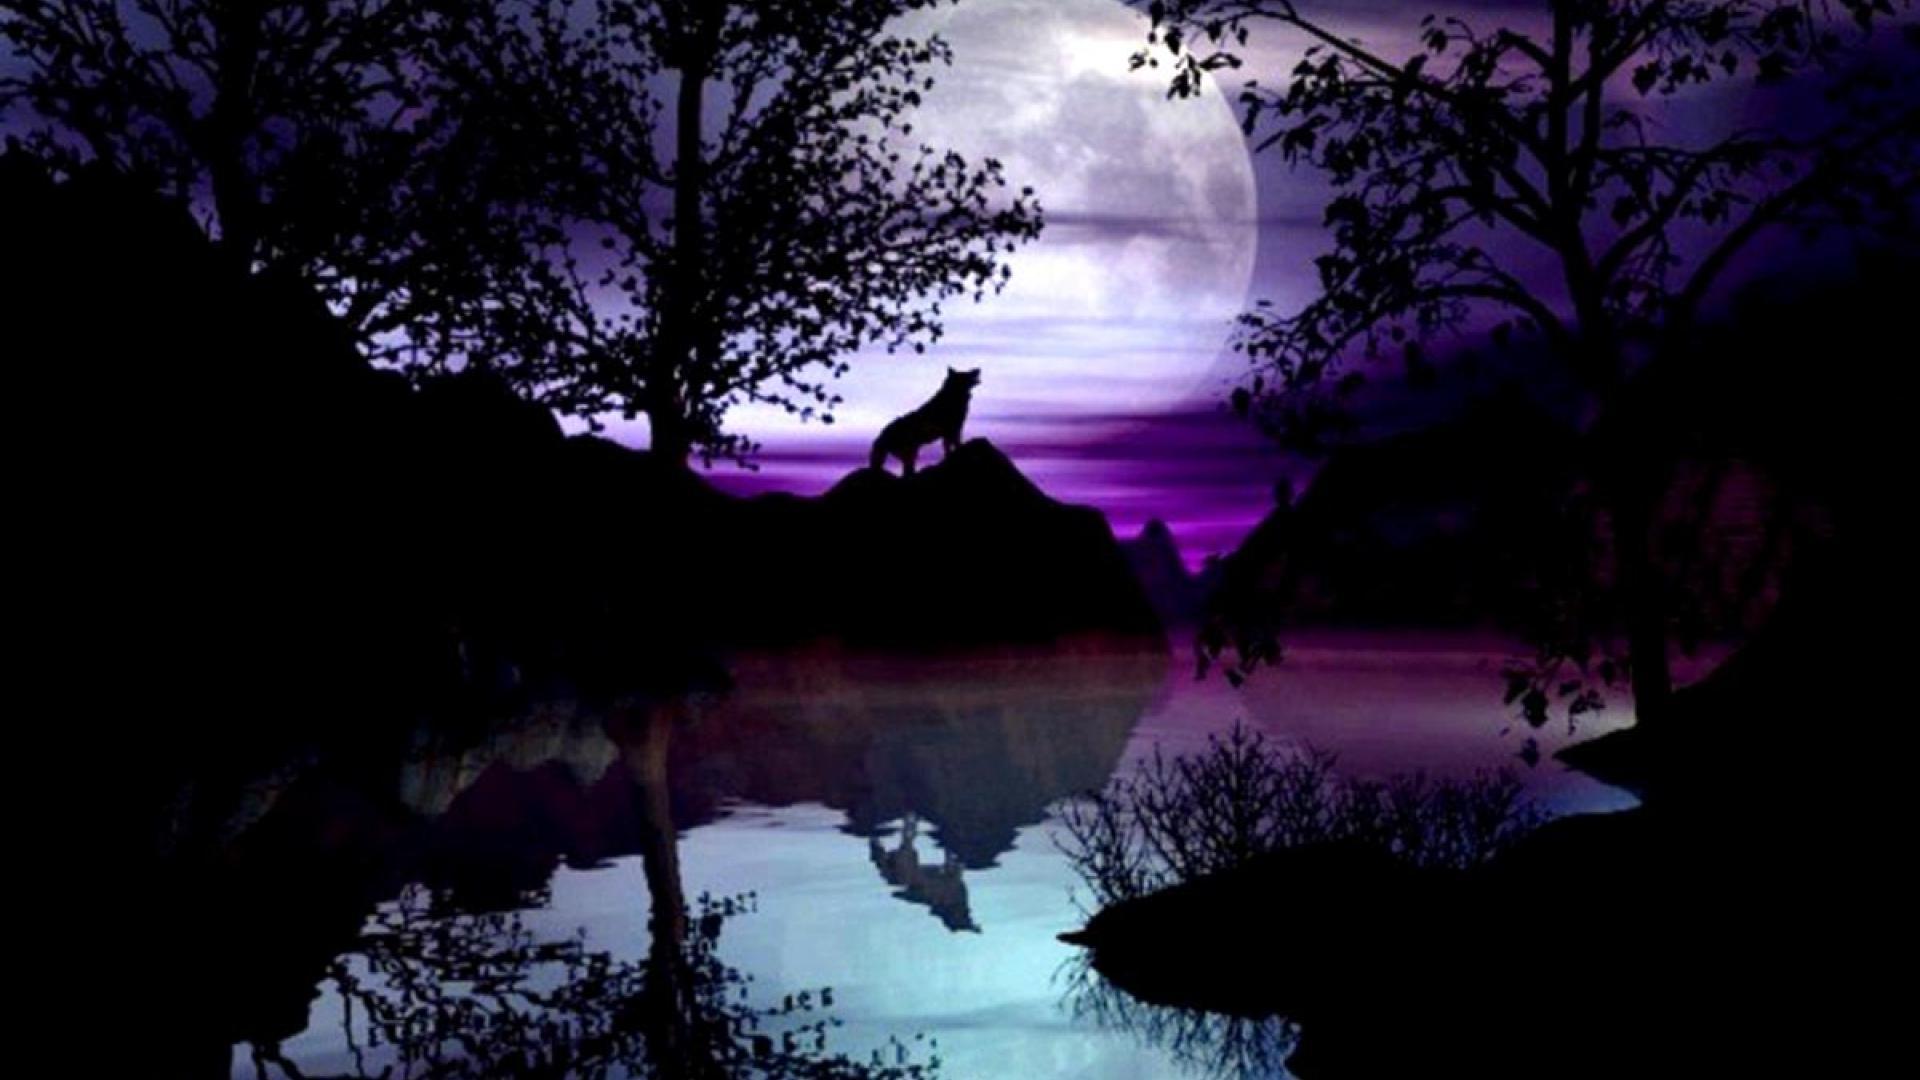 purple moon wolf